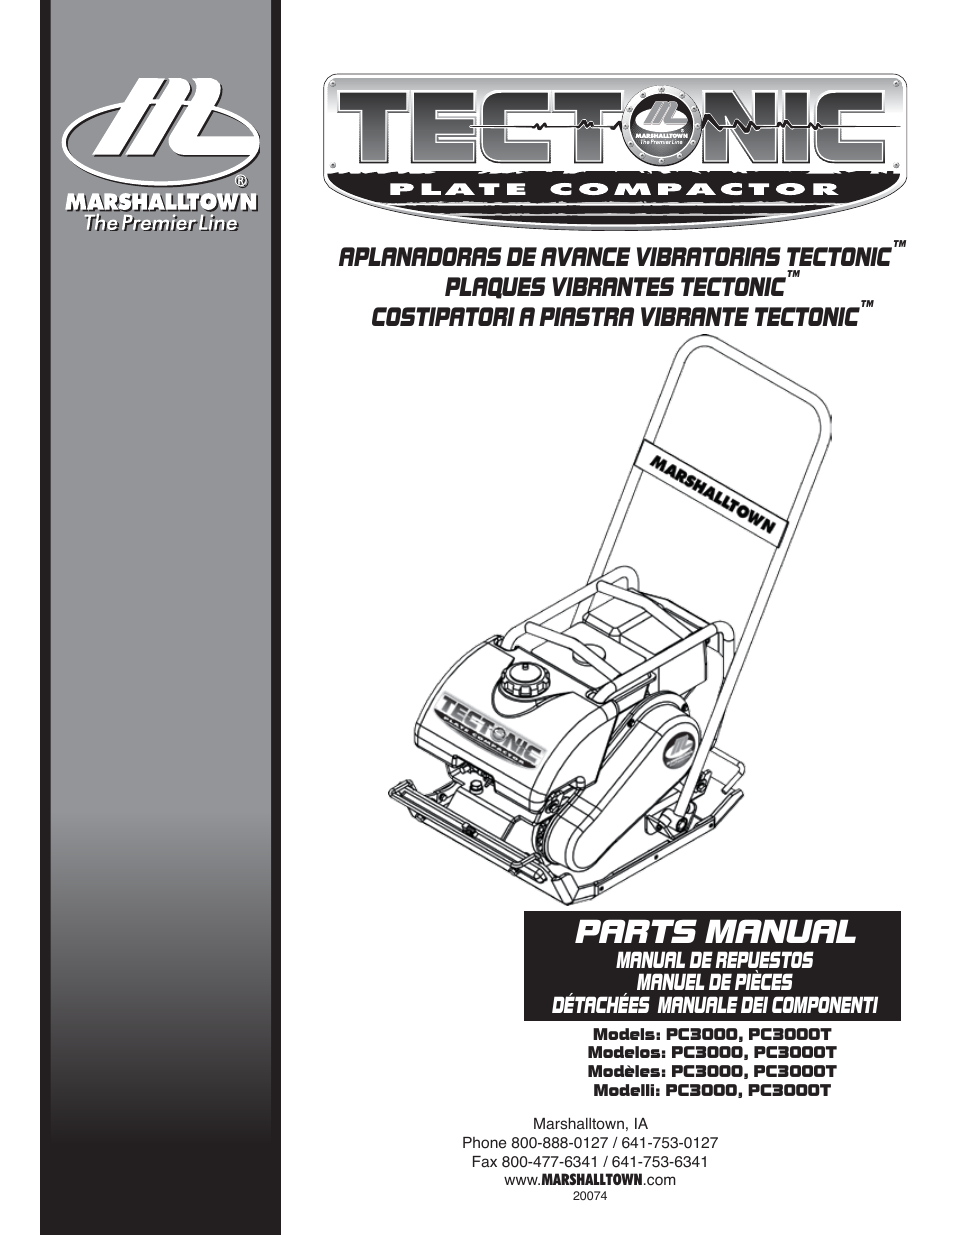 PC3000T Parts Manual